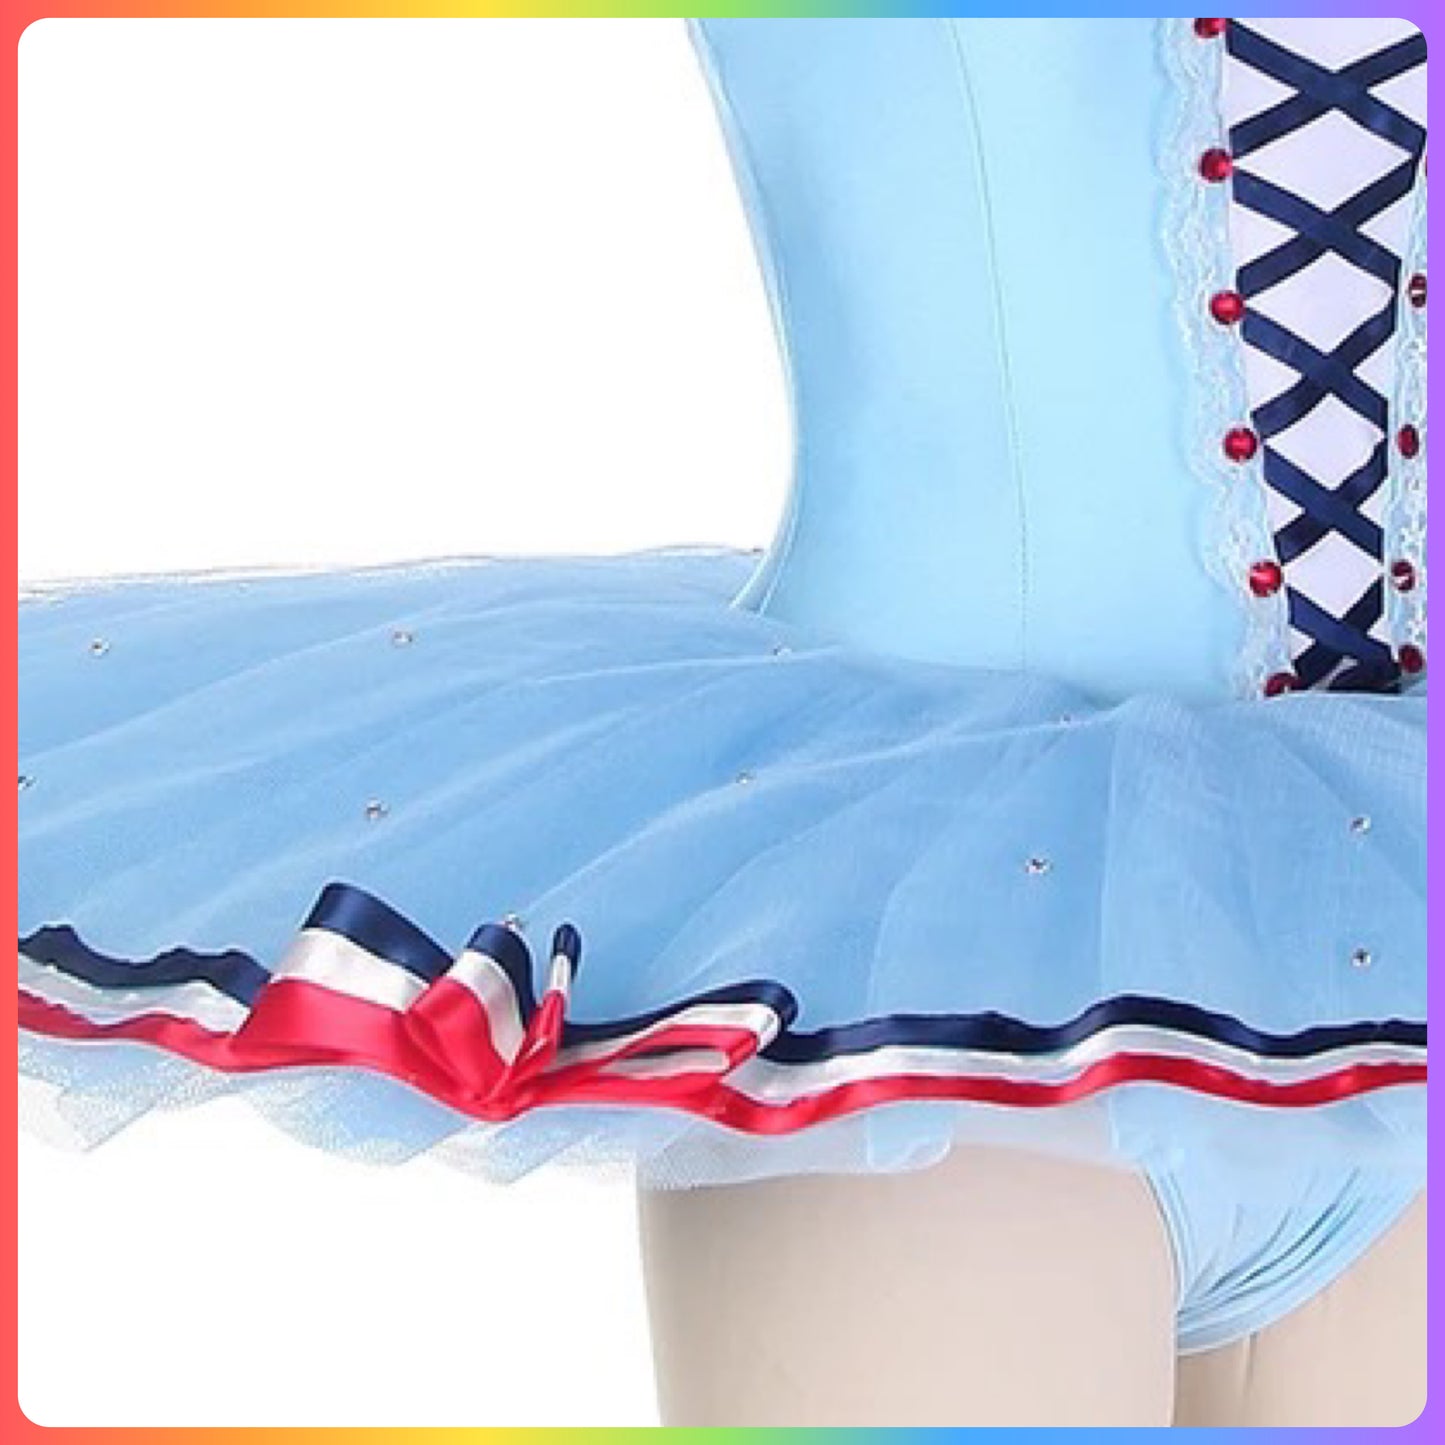 Sky Blue Lace Front Professional Ballet Pancake Tutu (Child & Adult Sizes)